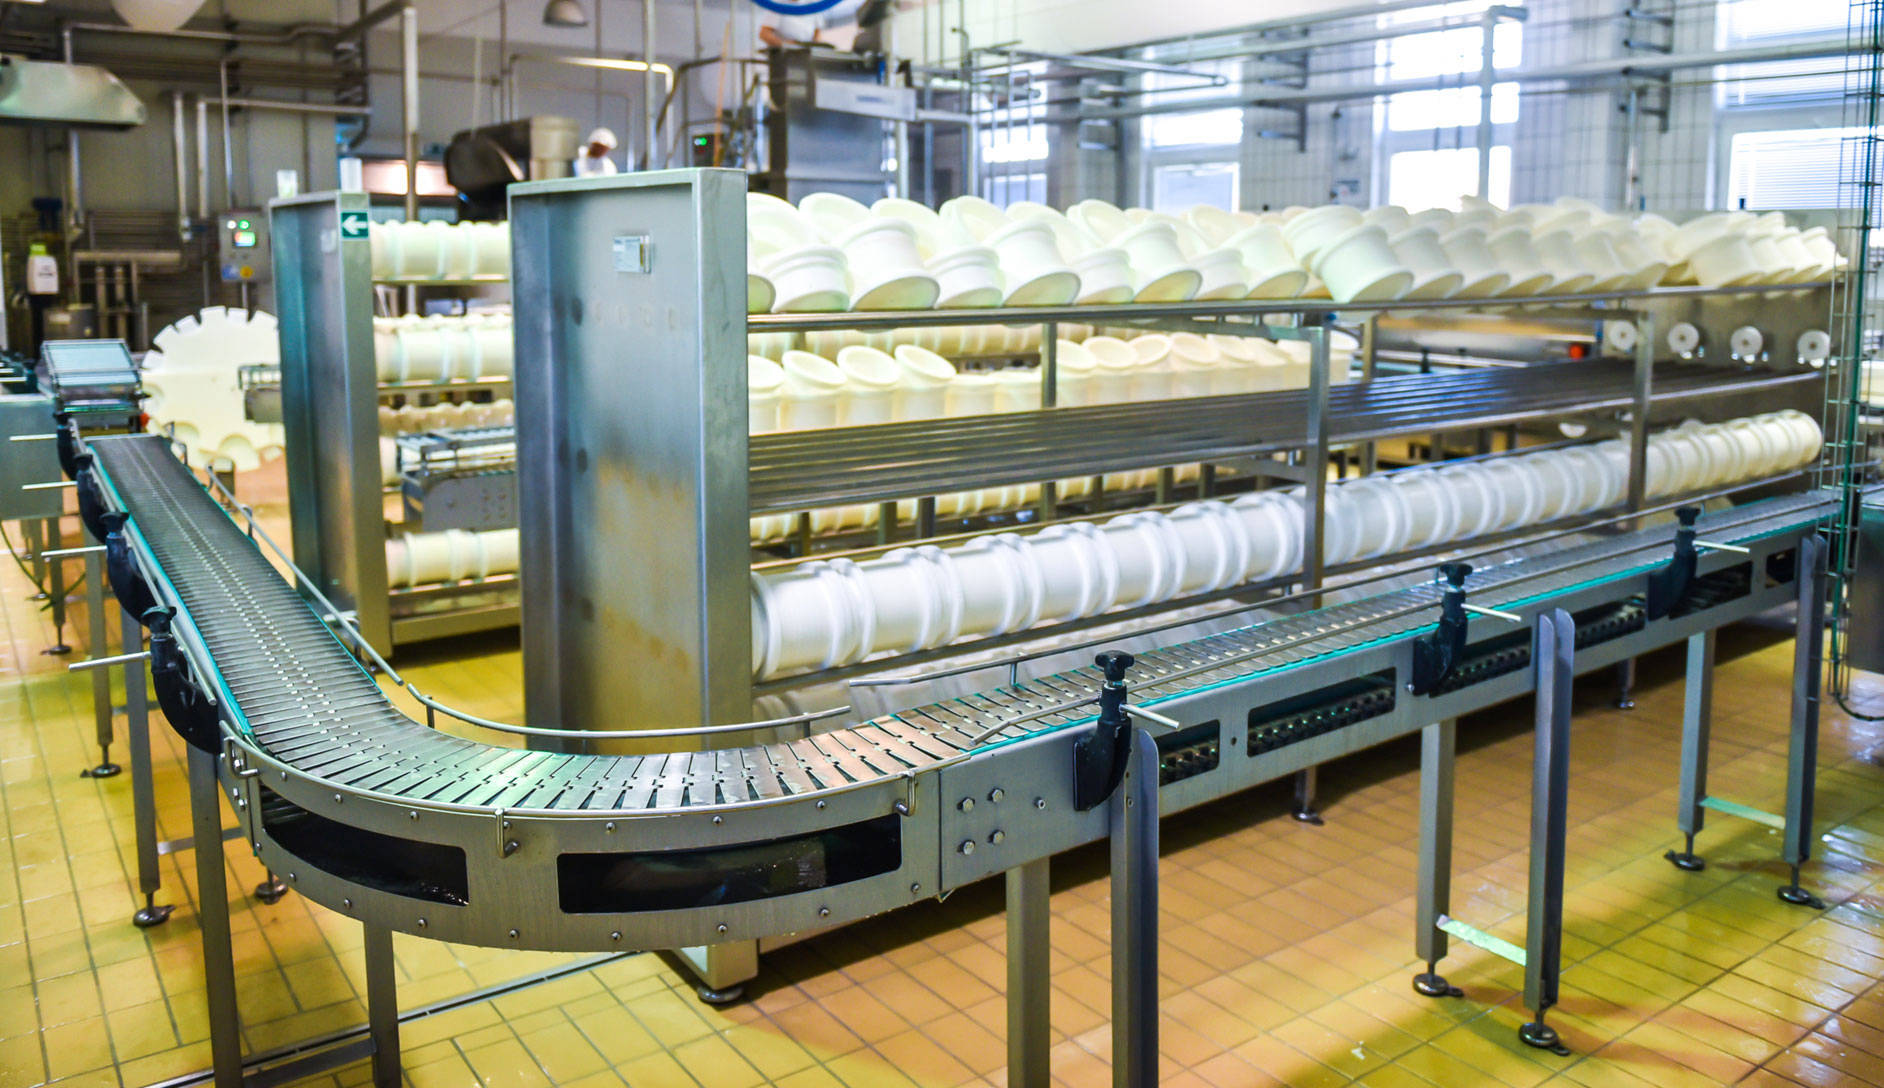 Job search milk processing plants portland oregon